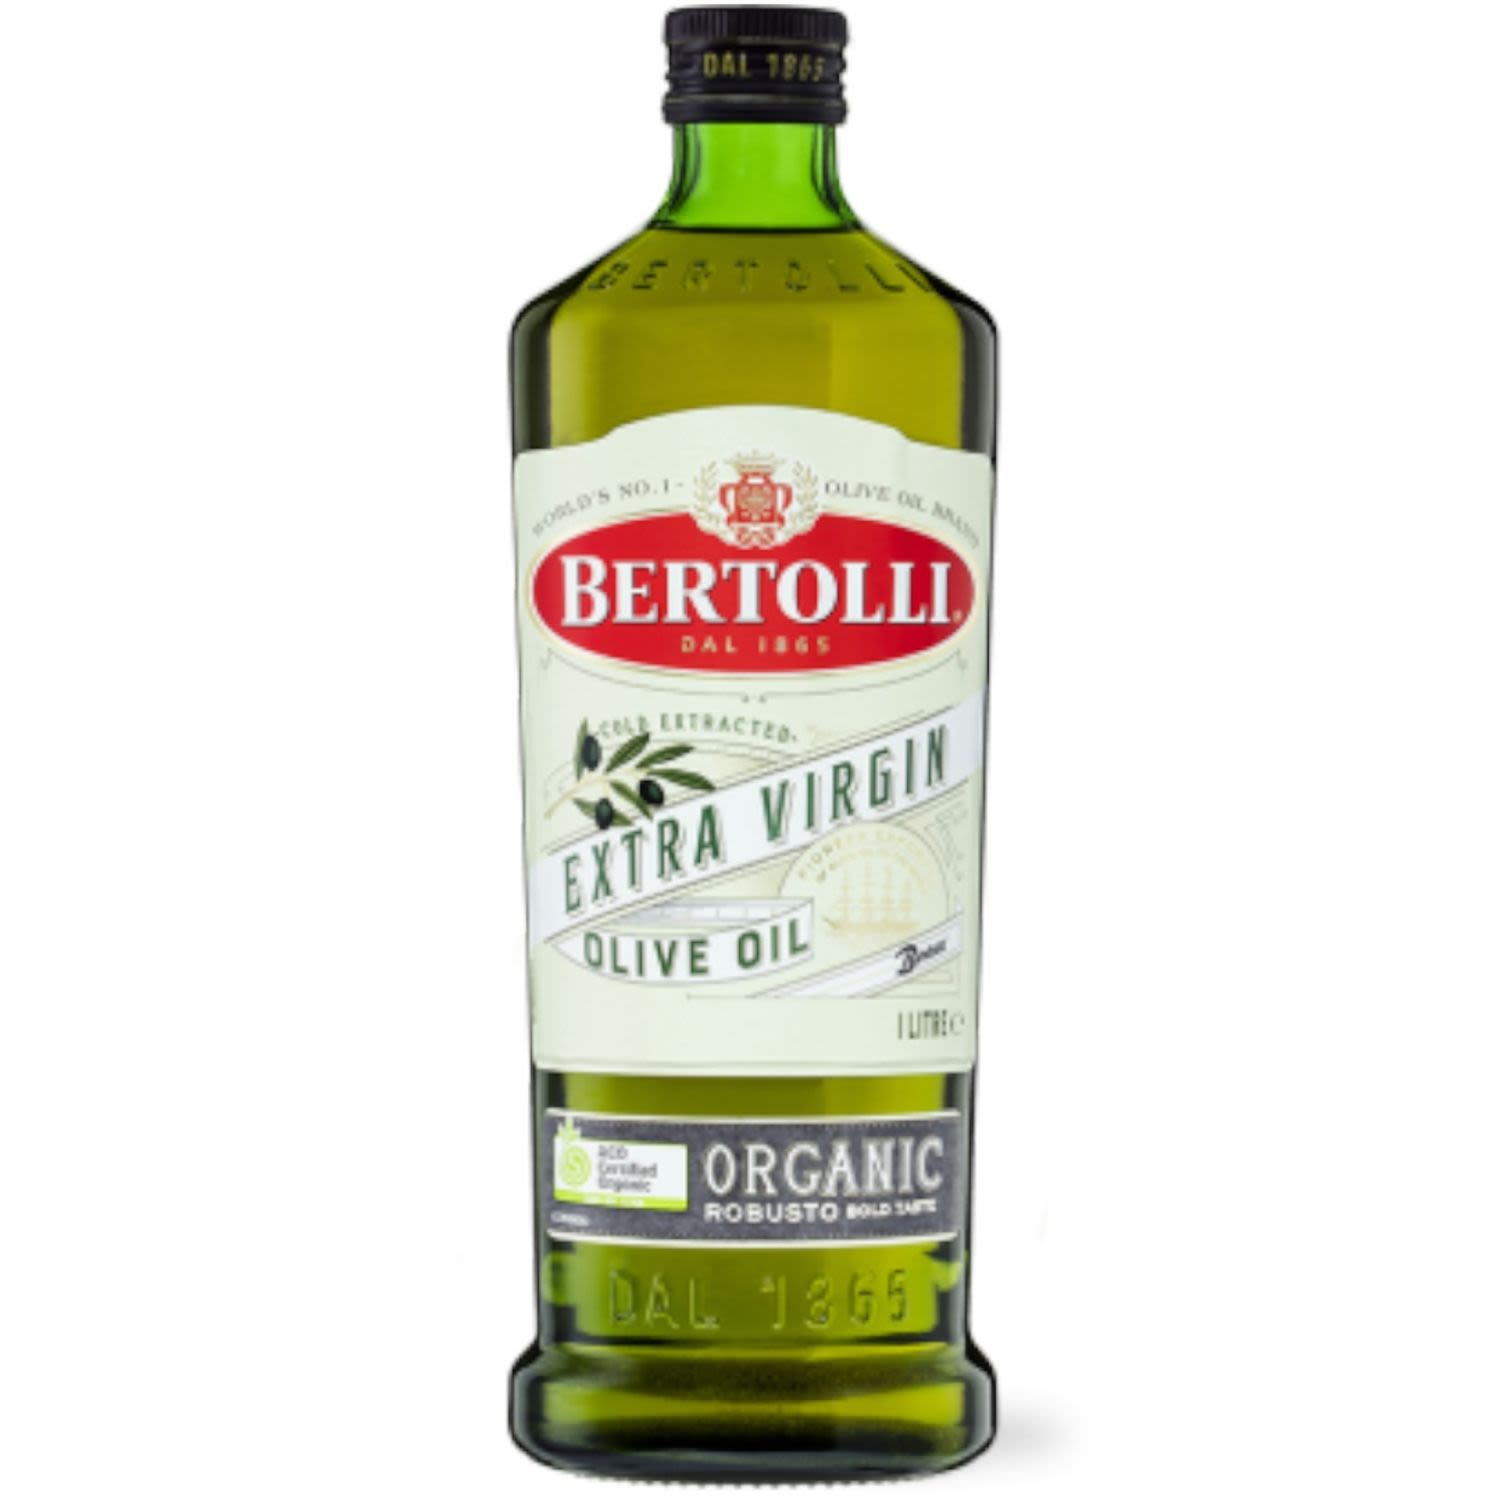 Bertolli Olive Oil Extra Virgin Organic Robust, 1 Litre